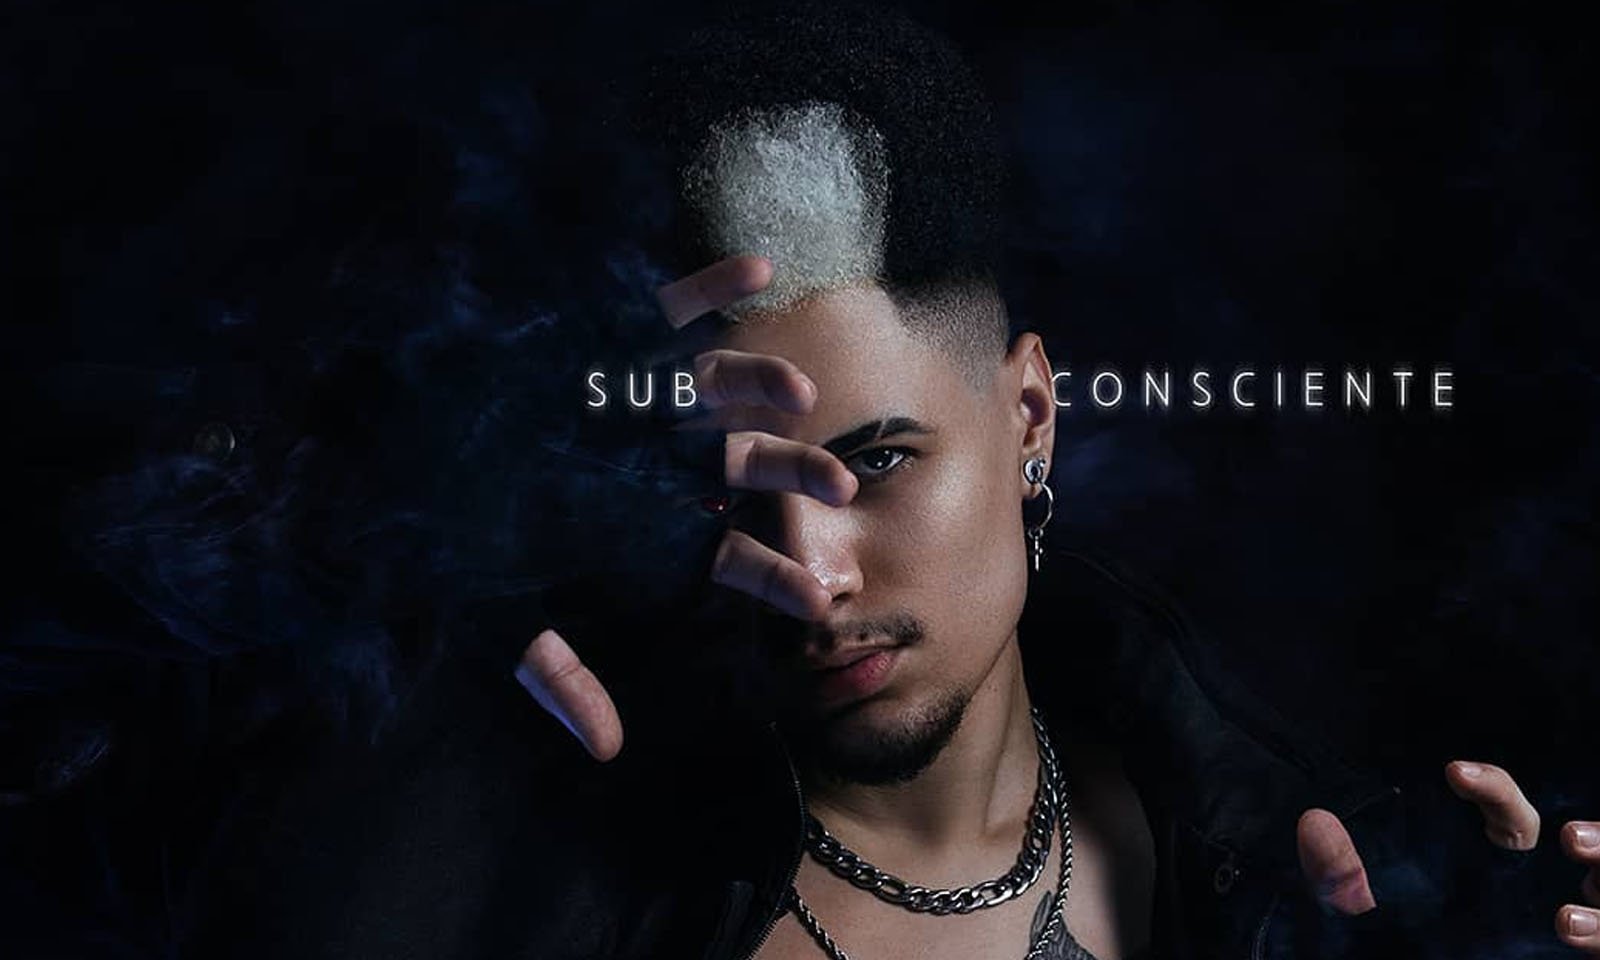 'Subconsciente': Murillo Zyess lança o seu primeiro álbum solo